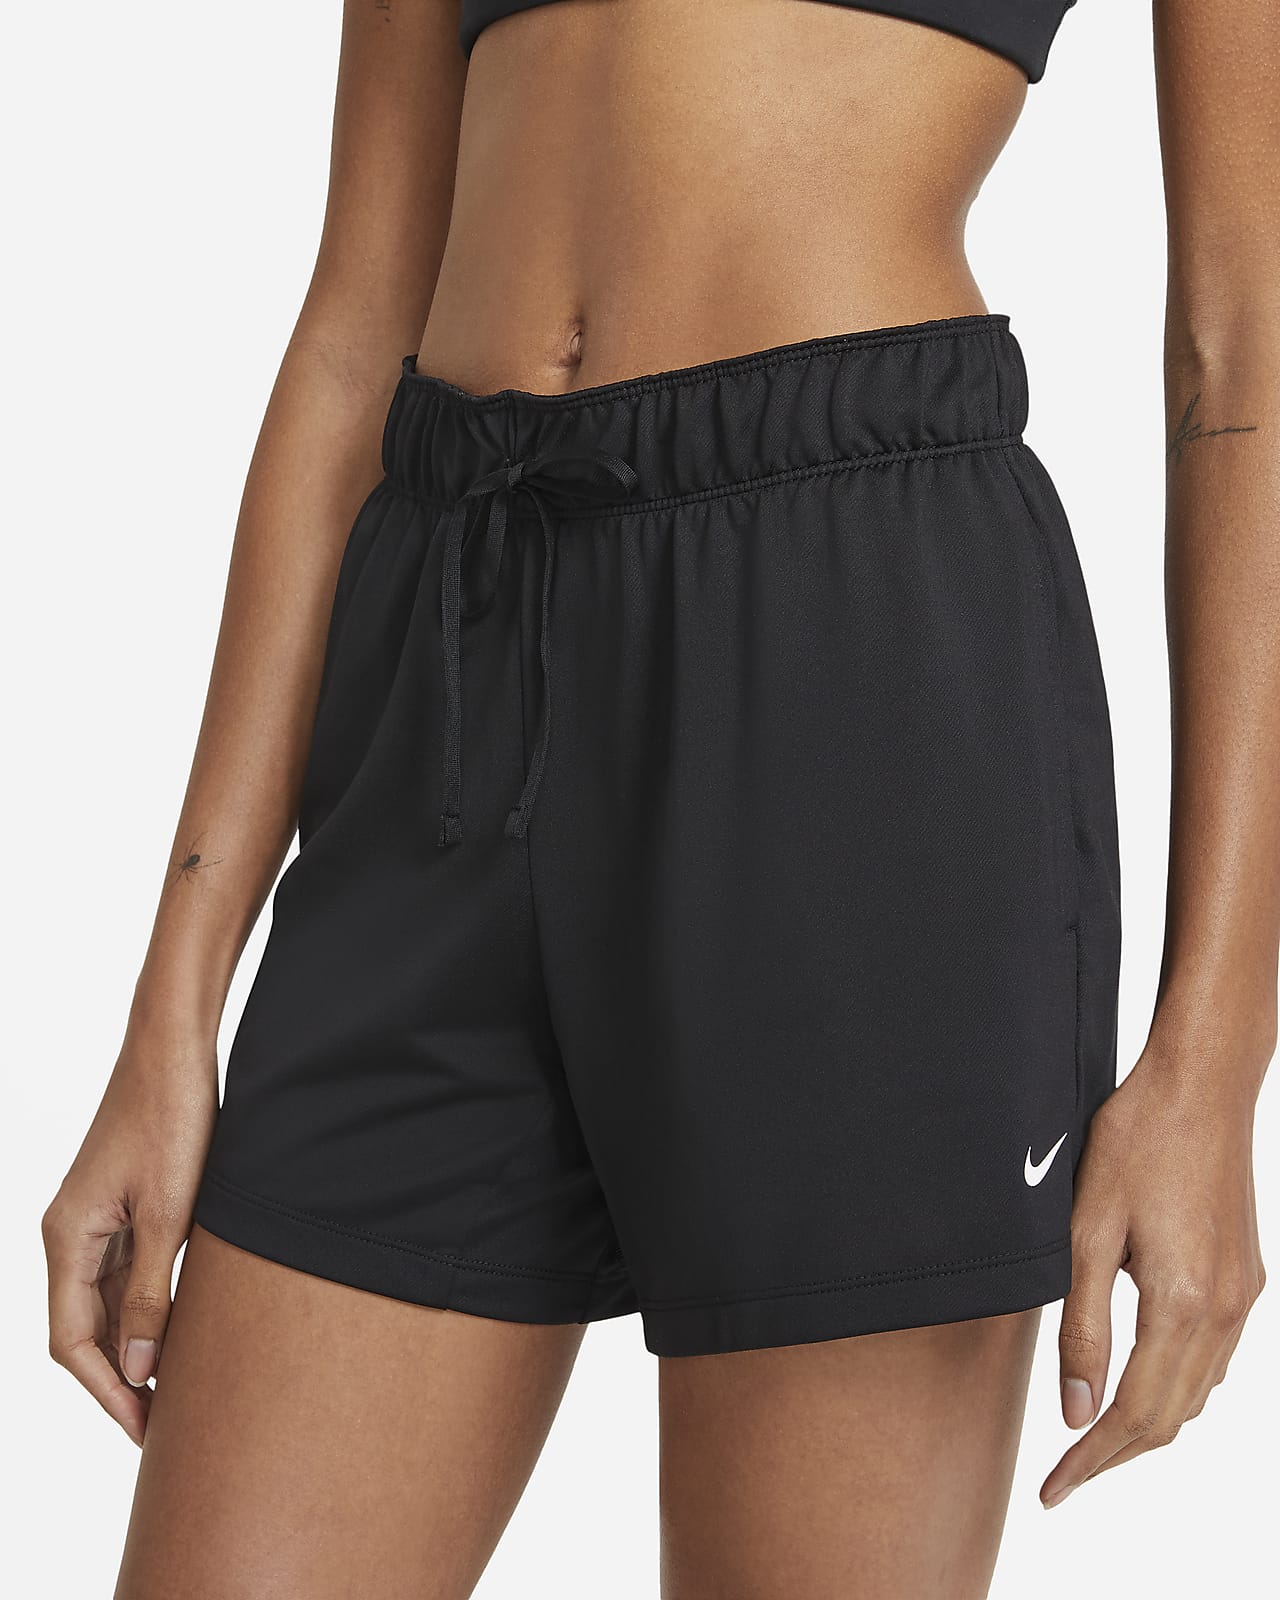 Nike Women's Training Shorts, Nike Pro Leggings